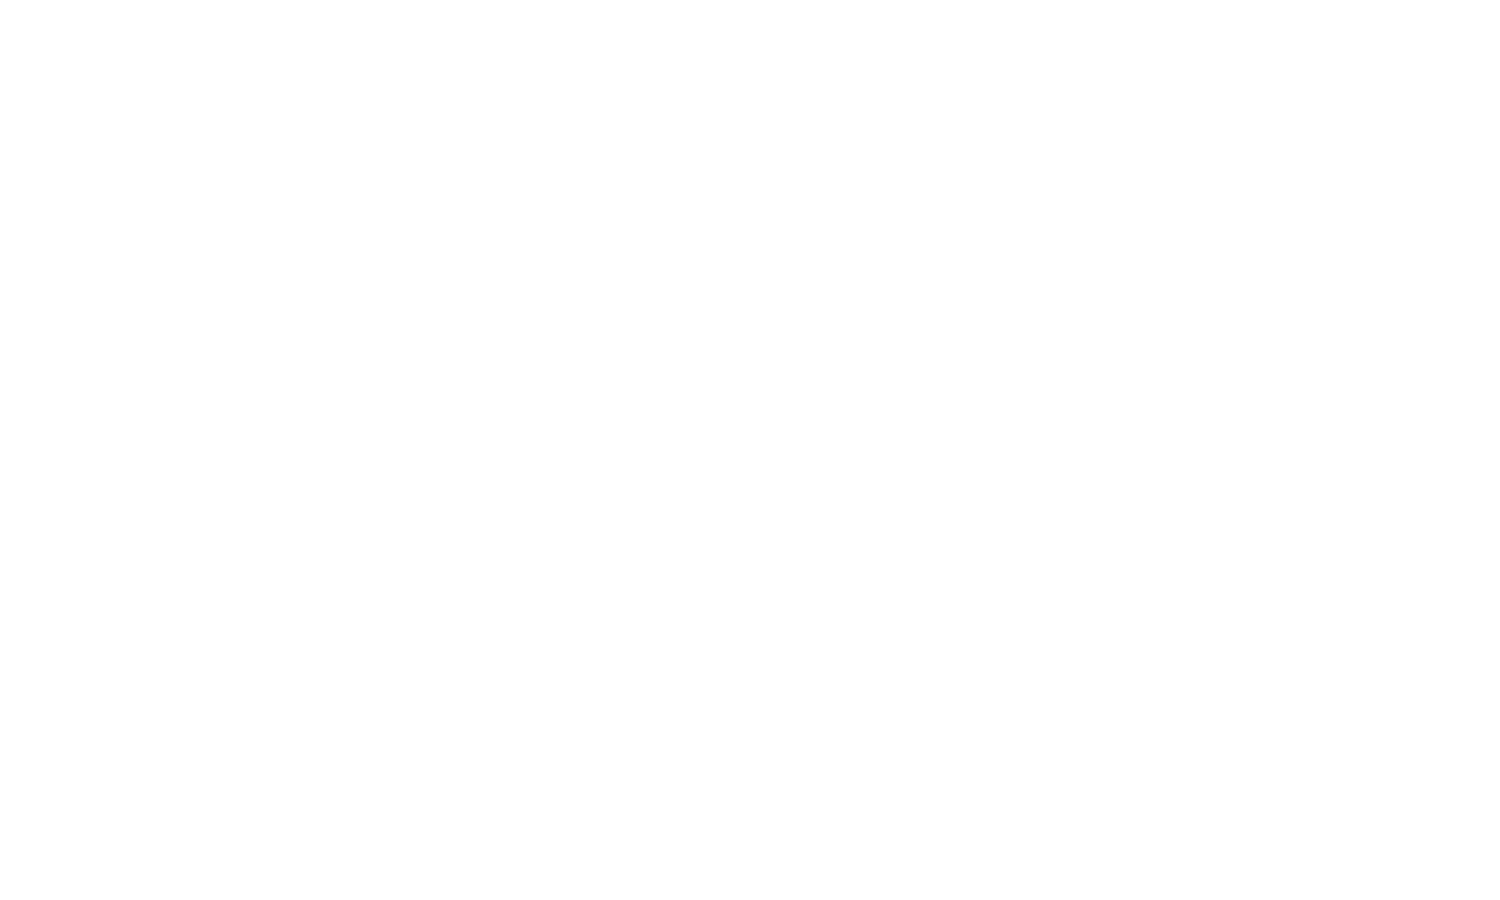 Liam Worth Photographer